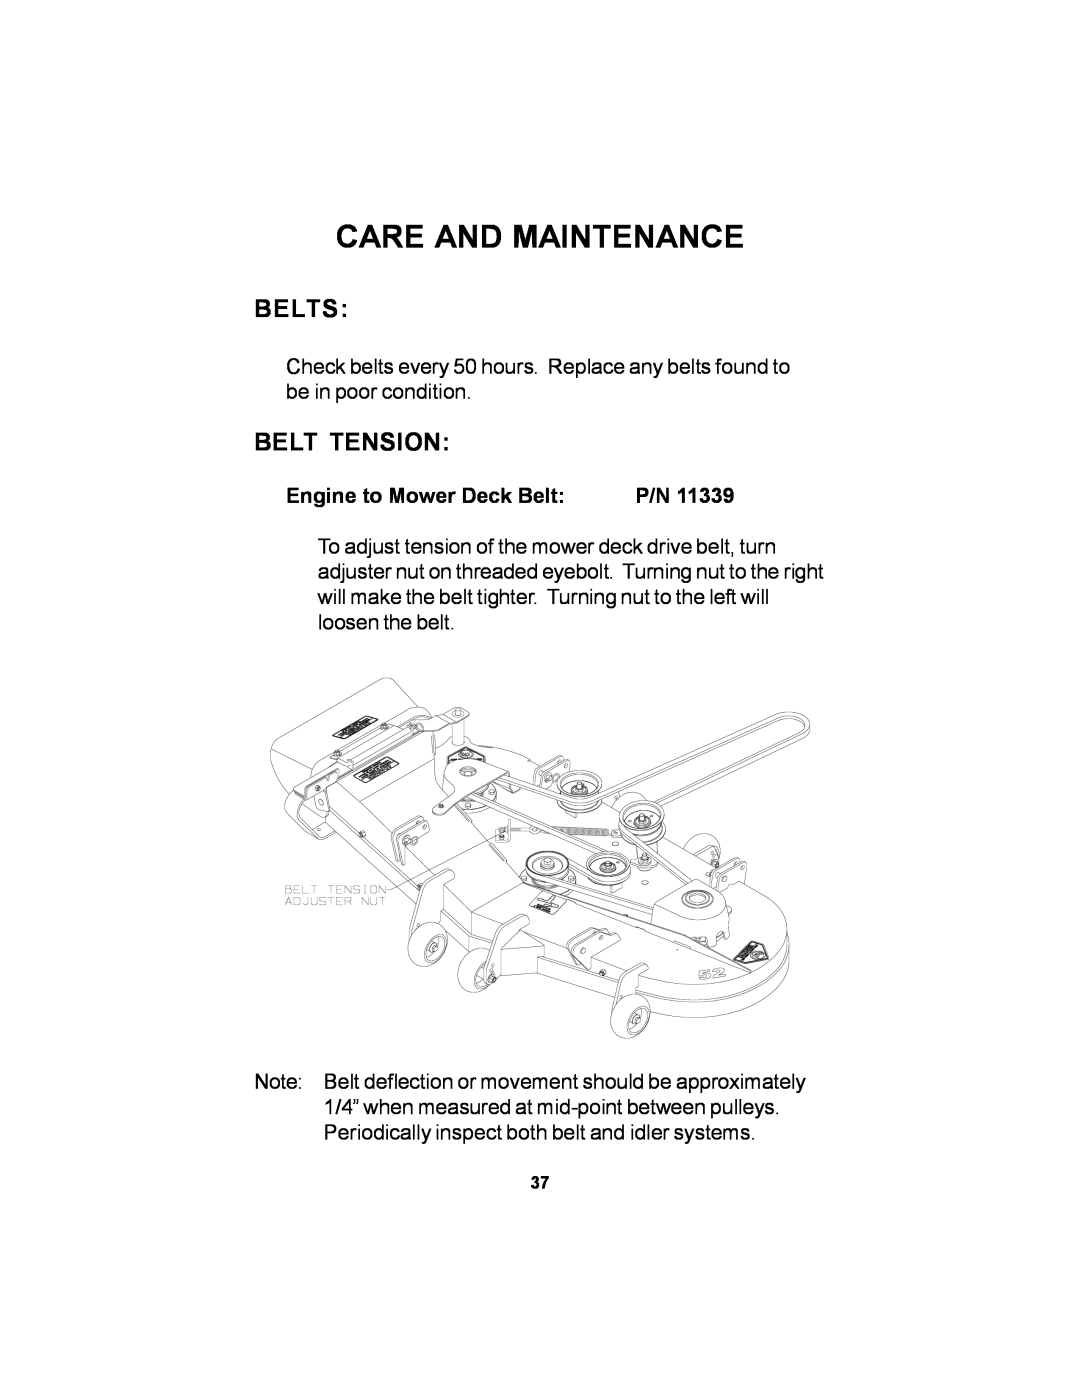 Dixon 18626-106 manual Belts, Belt Tension, Care And Maintenance, Engine to Mower Deck Belt 